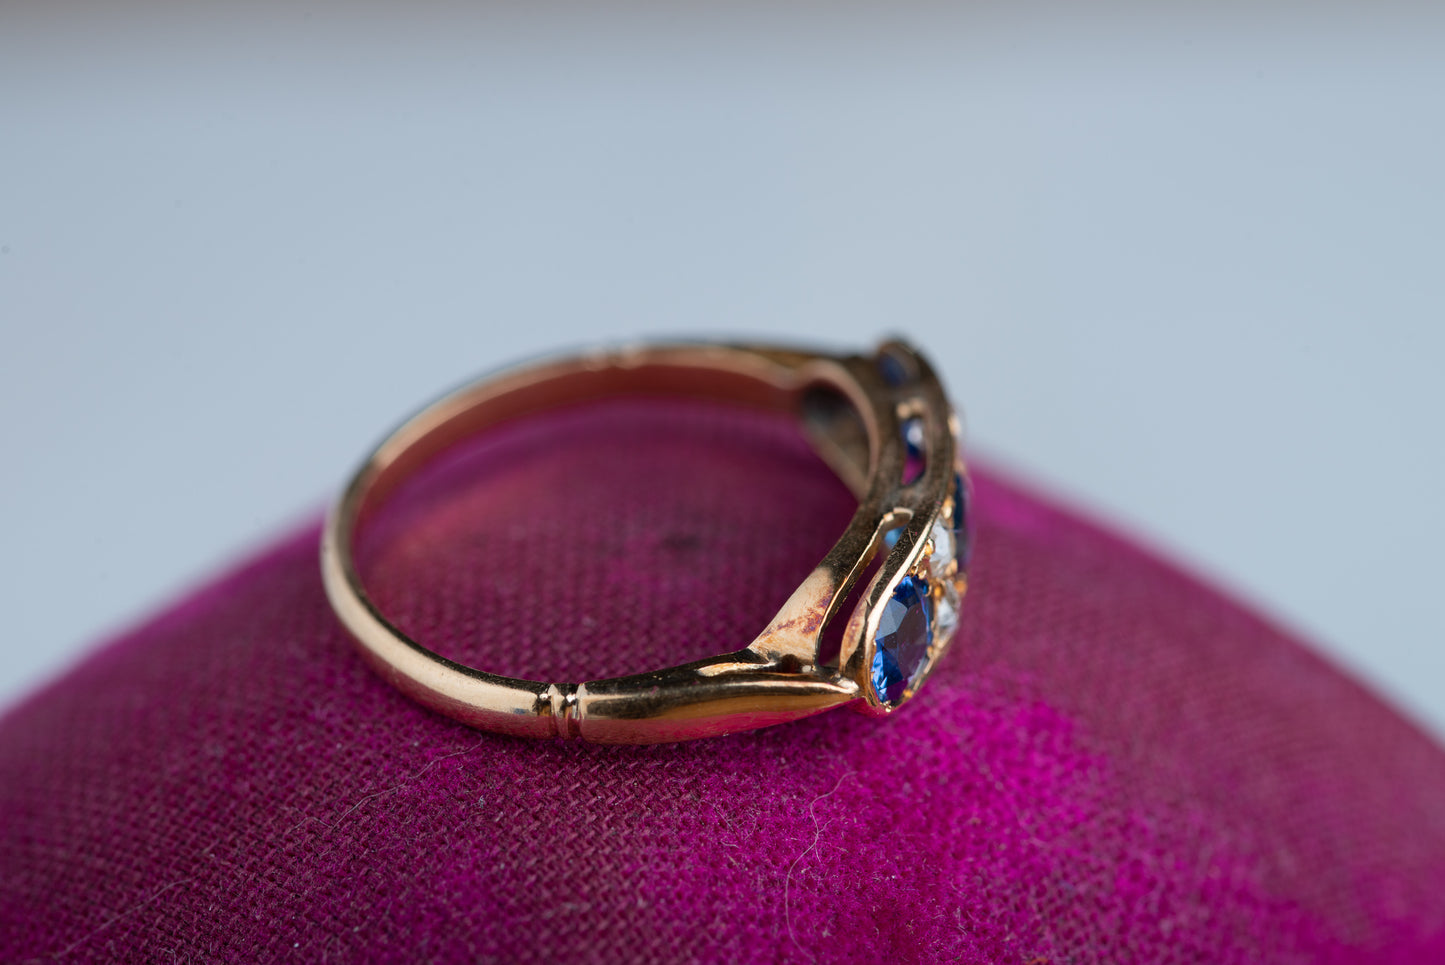 Stunning Sapphire & Diamond Ring